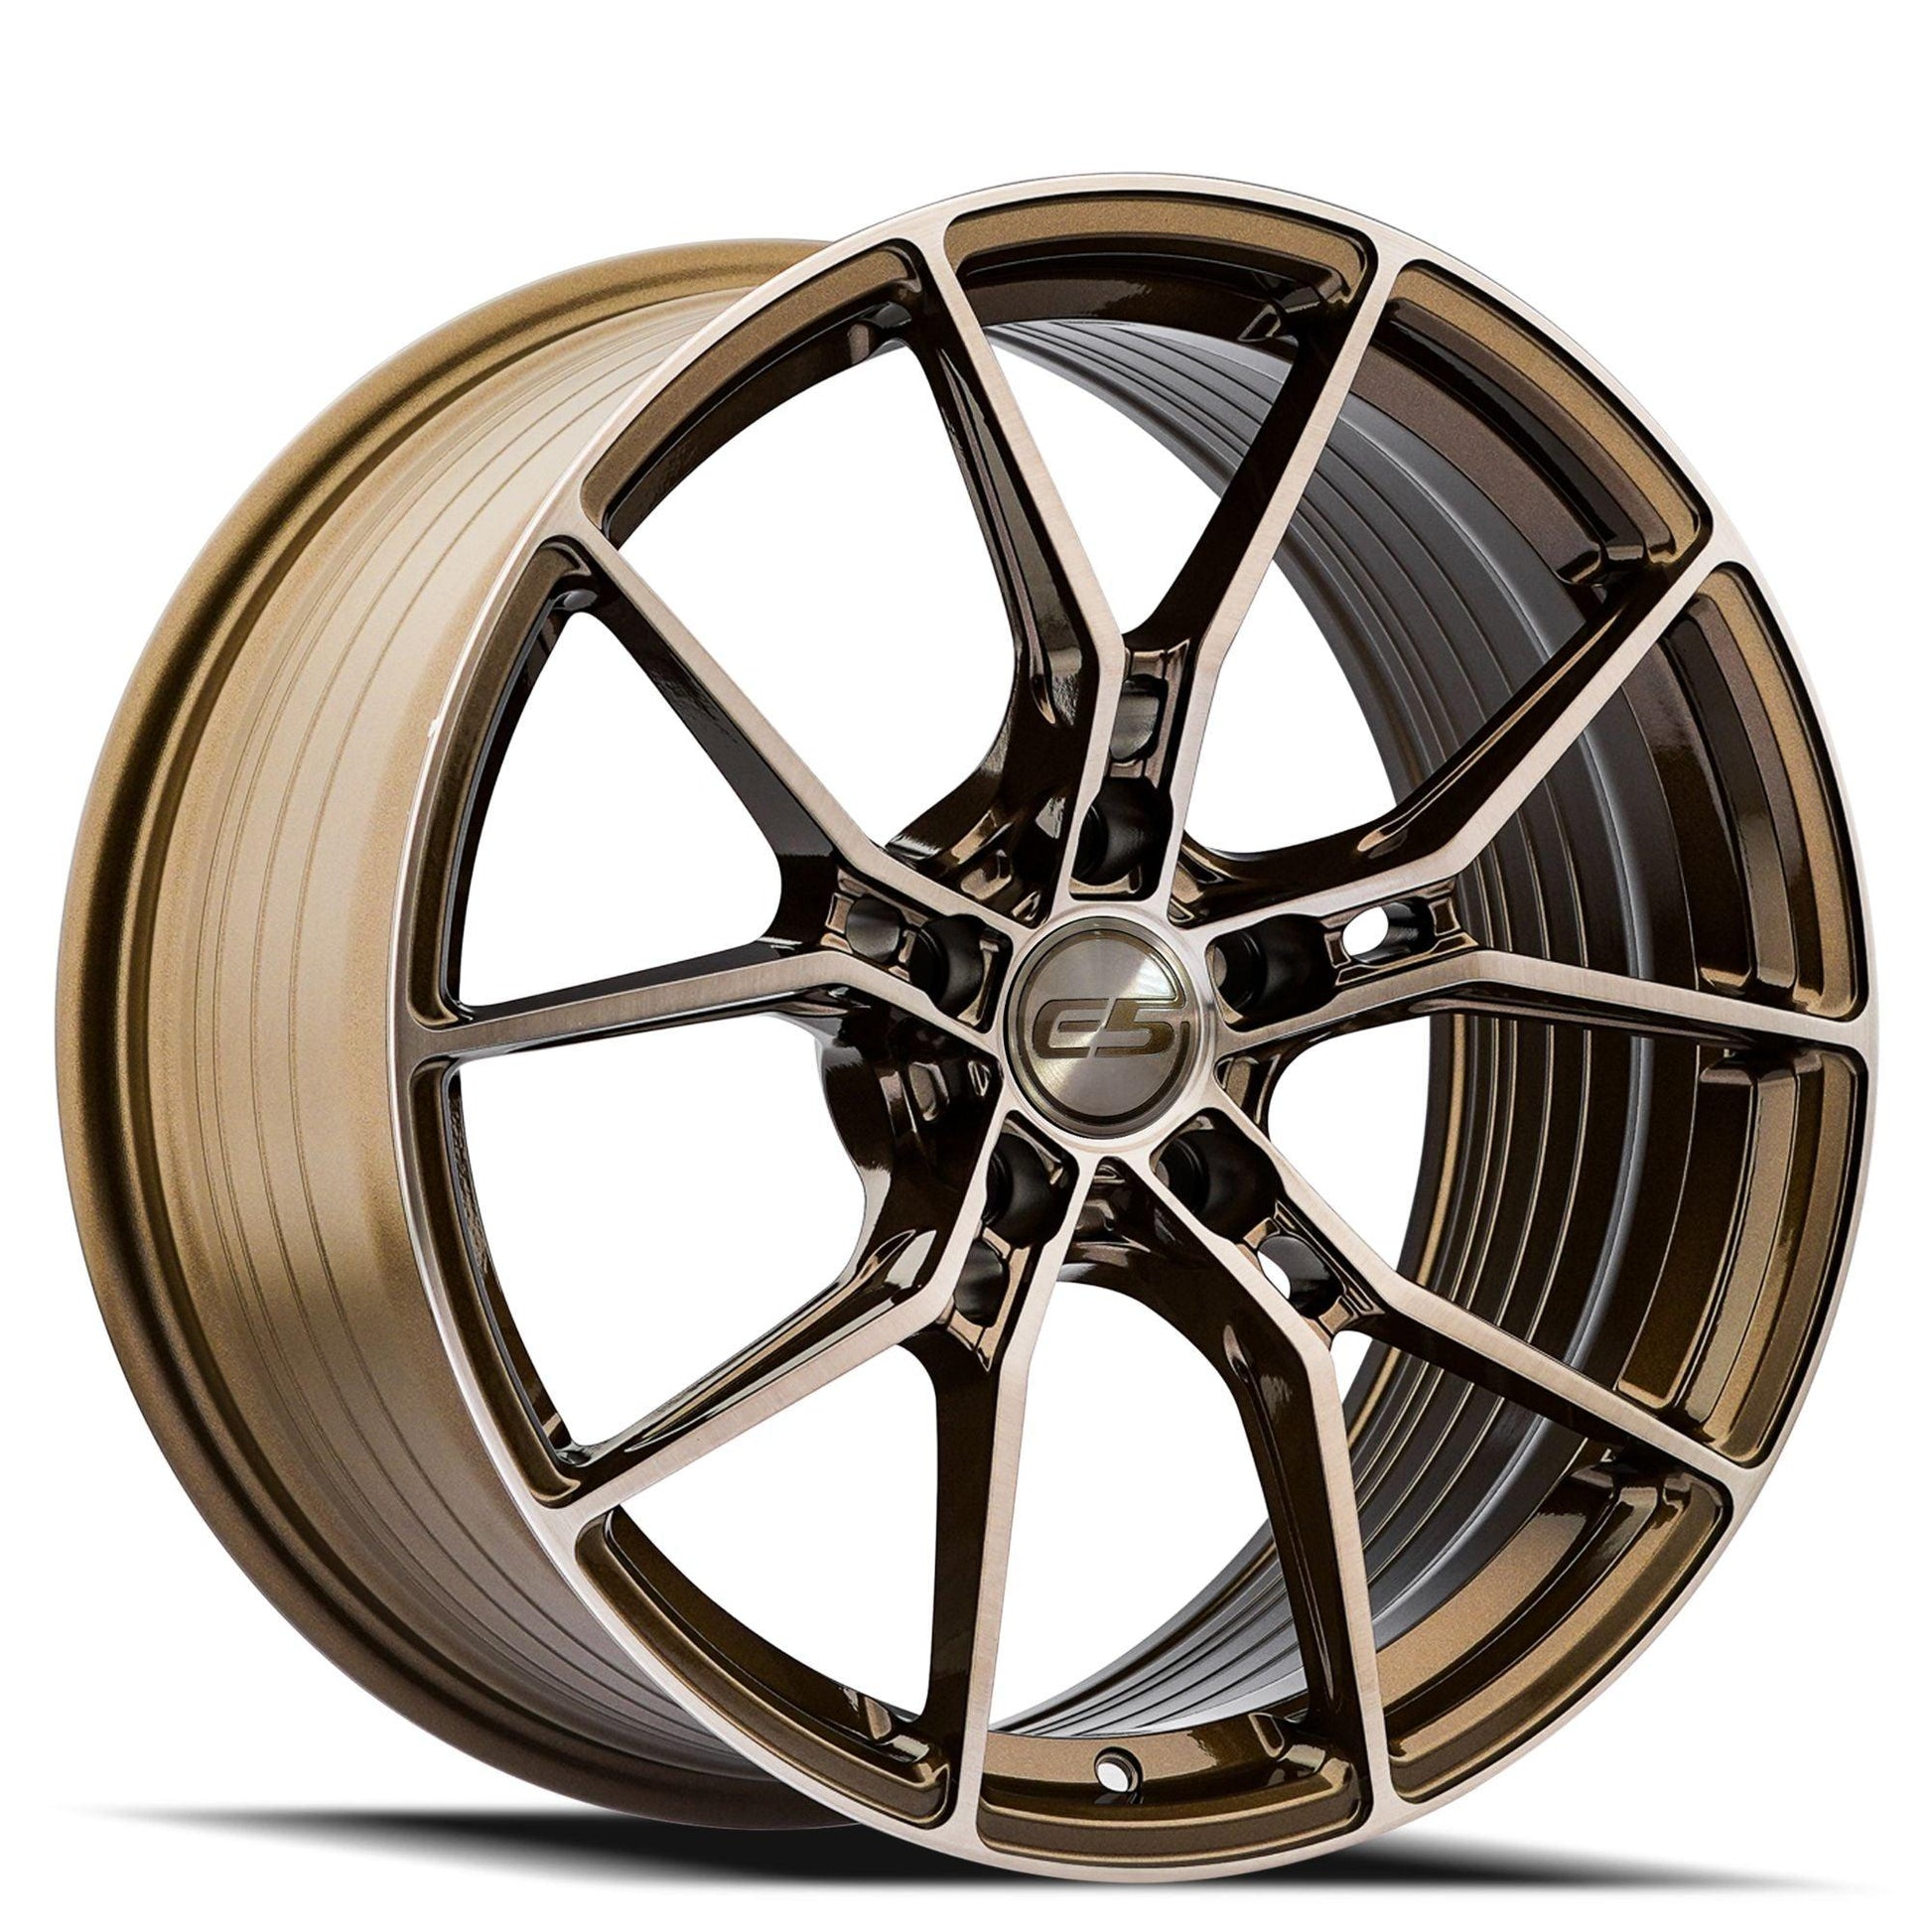 E5 Daytona 20x9 / 21x12 wheels for C8 Corvette Z51 - Gem Motorsports